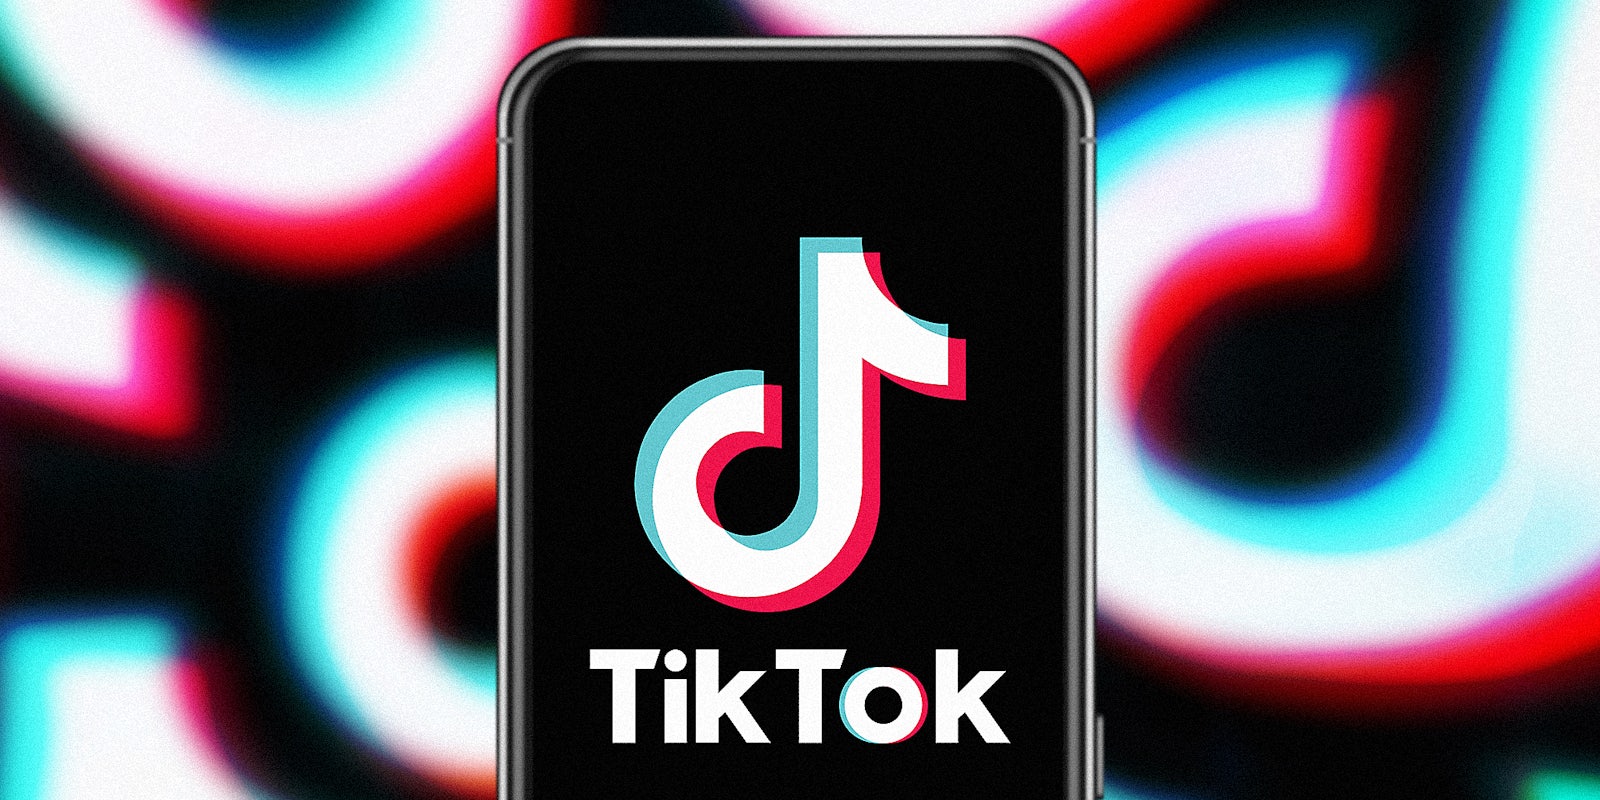 A cell phone using the TikTok app.